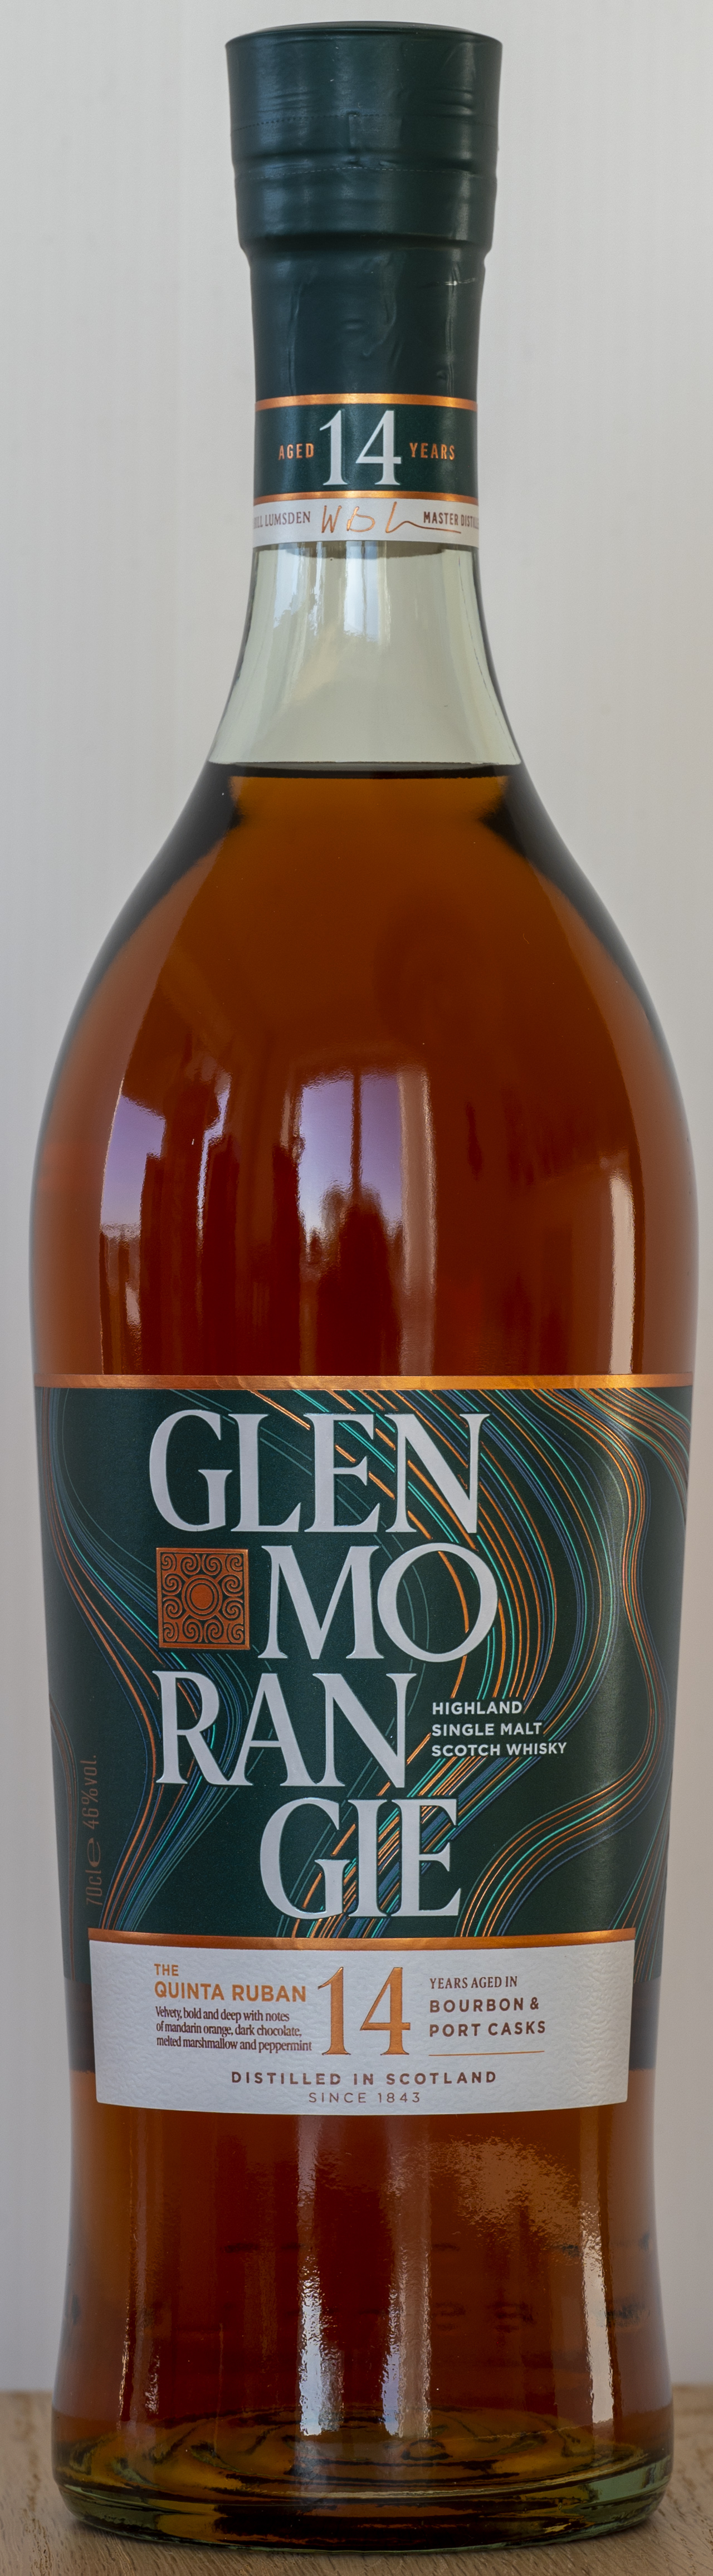 Billede: Z62_6459 - Glenmorangie 14 - bottle front.jpg